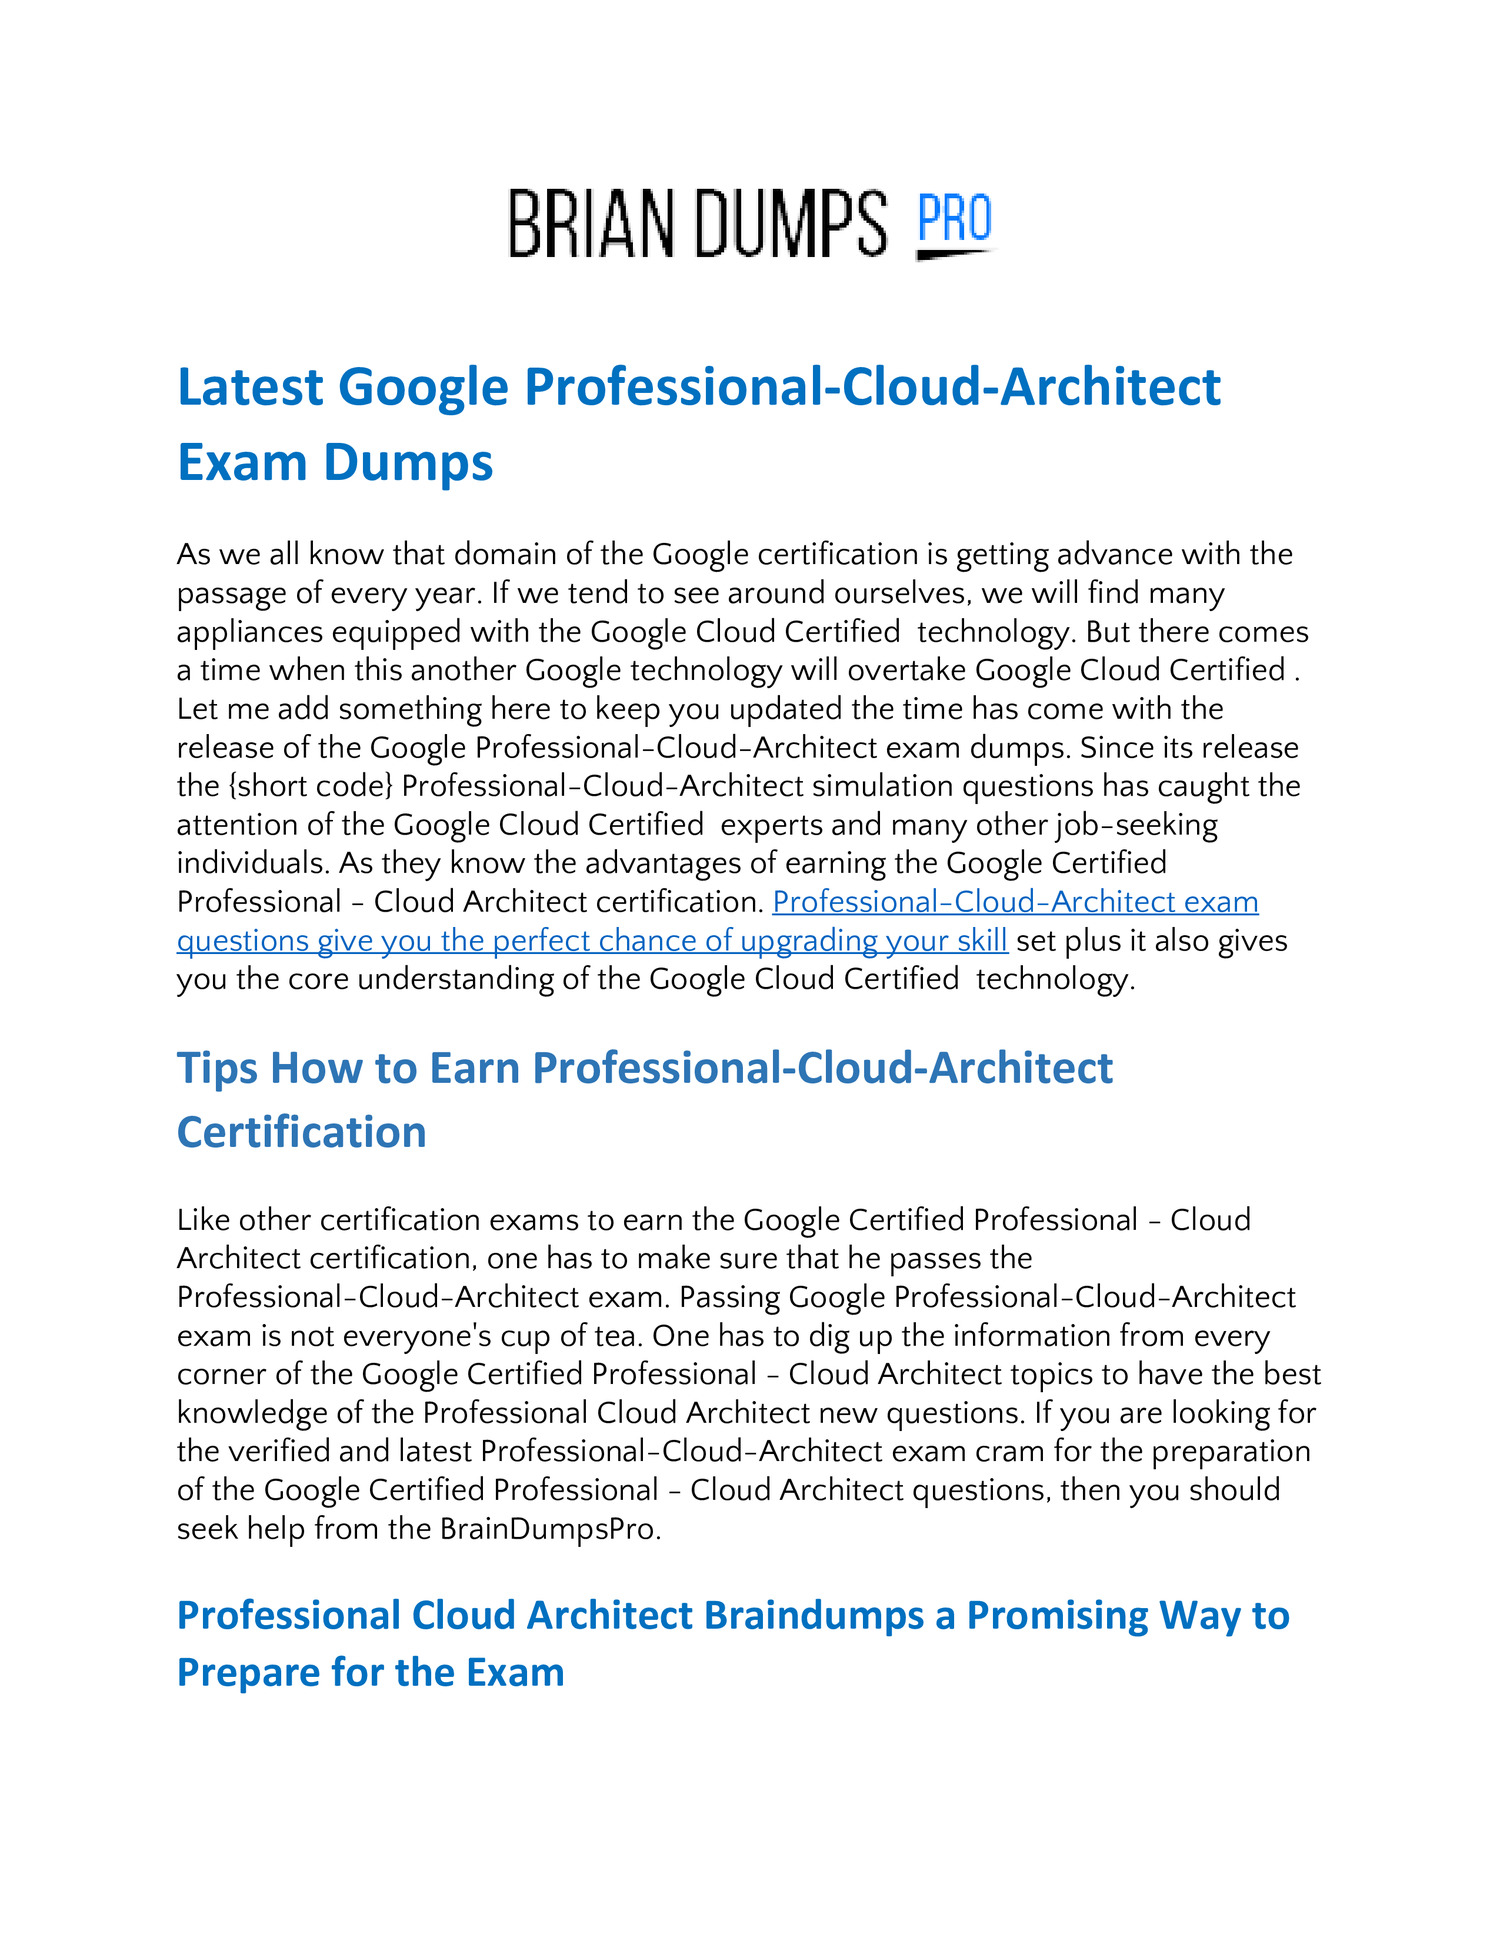 Latest Professional-Cloud-Architect Exam Fee